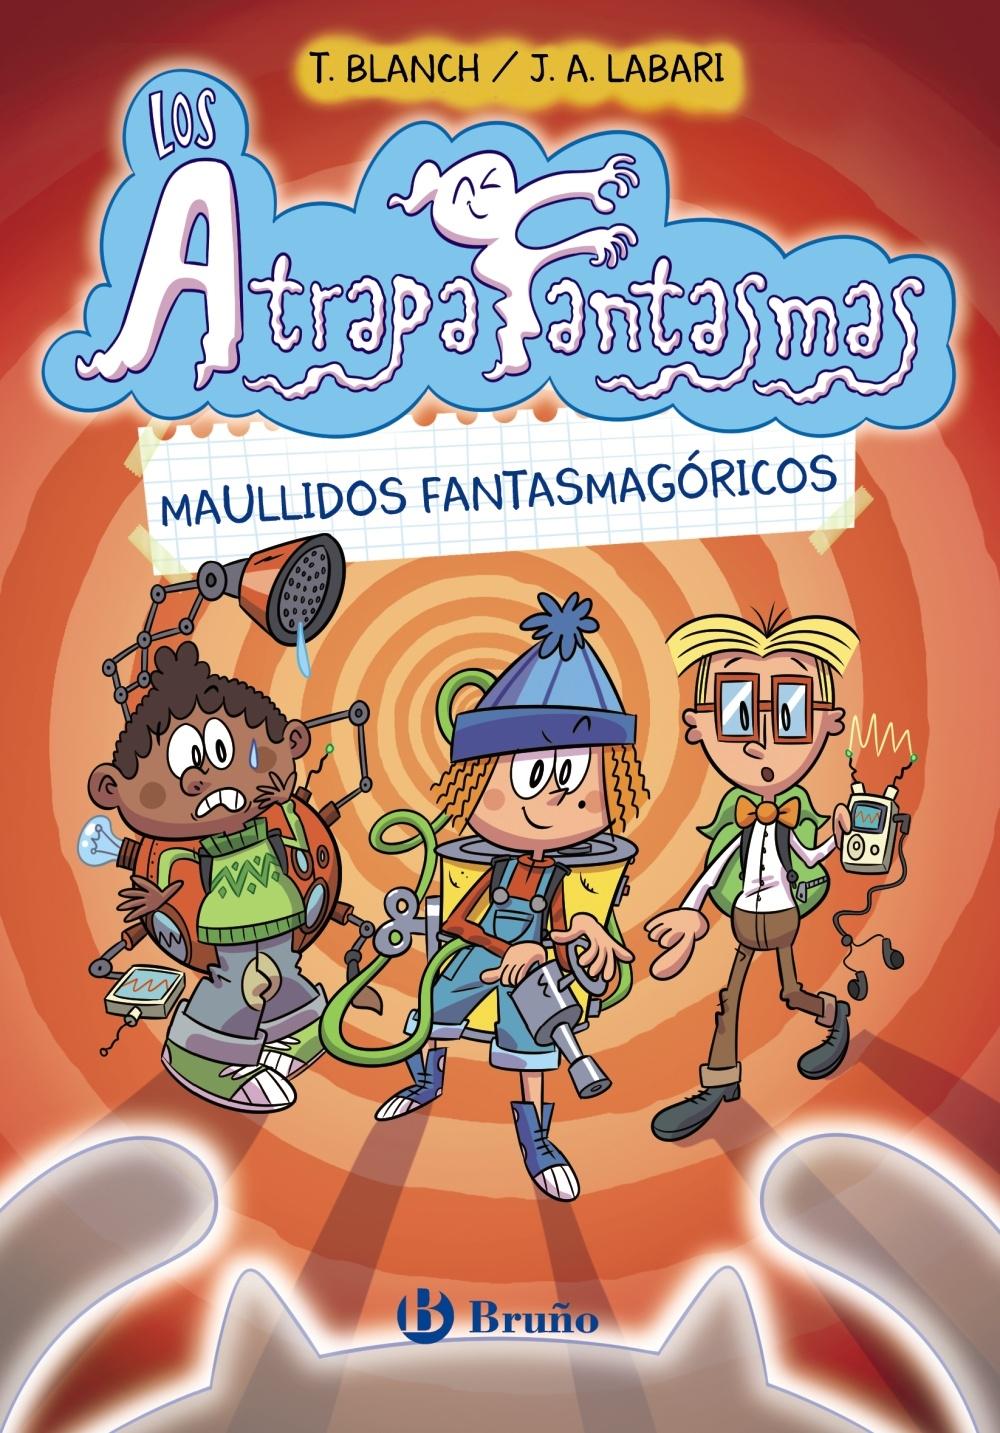 Los Atrapafantasmas 1 "Maullidos Fantasmagóricos". 